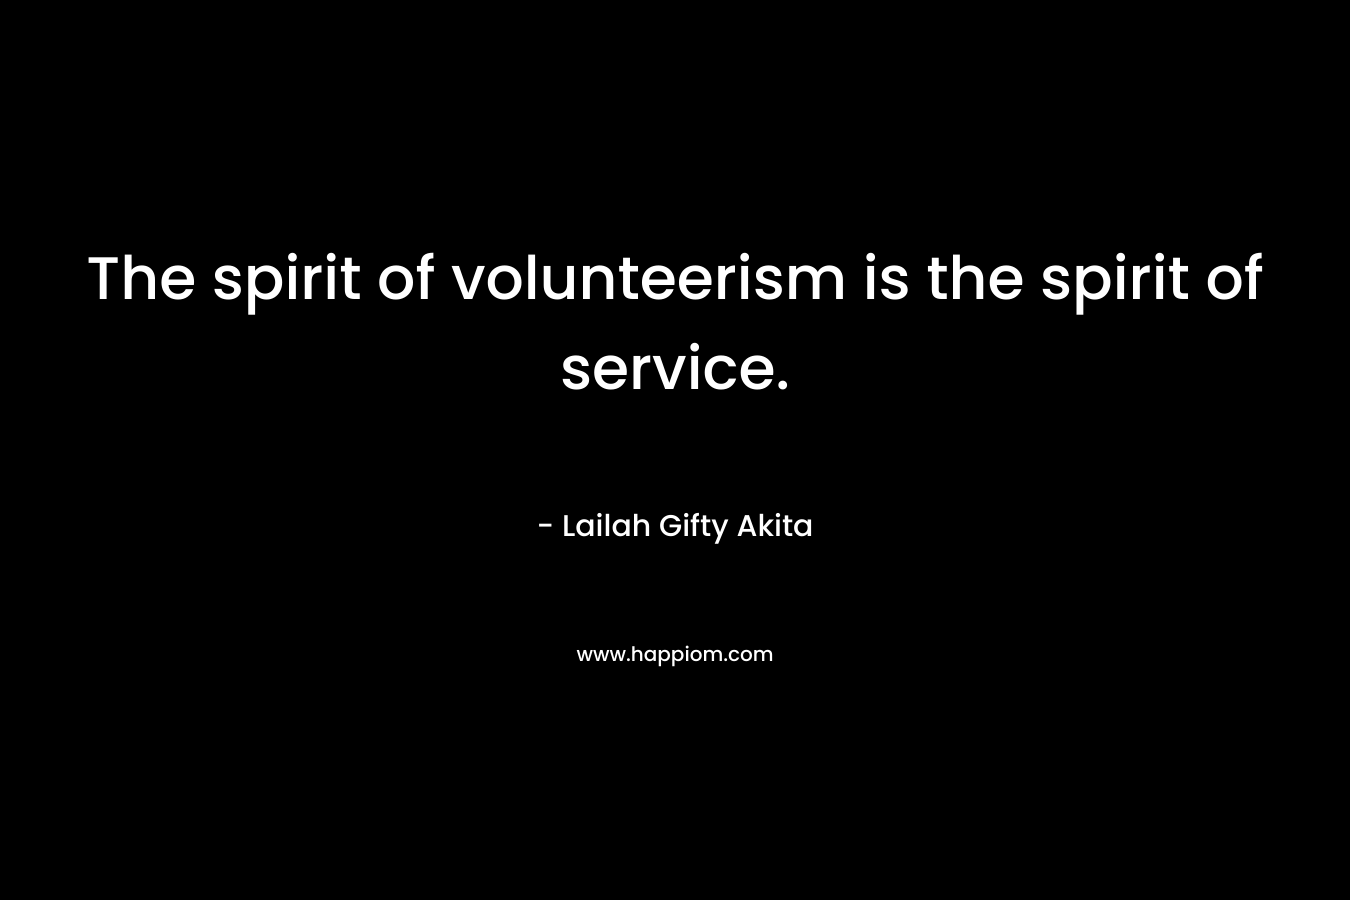 The spirit of volunteerism is the spirit of service.